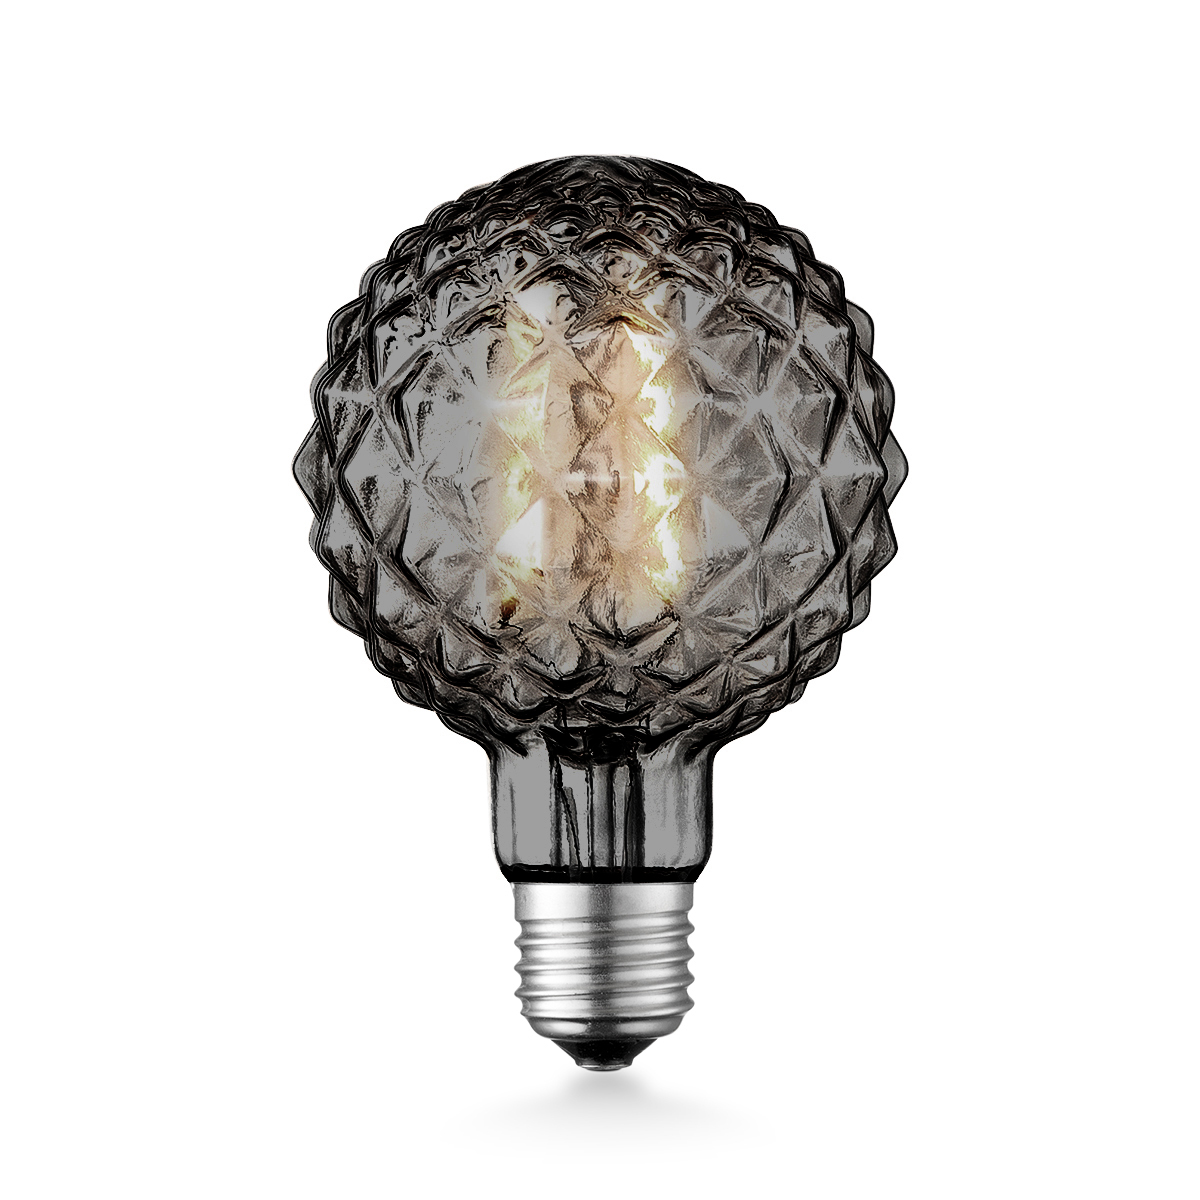 Tangla lighting - TLB-8073-04TM - LED Light Bulb Deco filament - G125 4W titanium - grenade - dimmable - E27